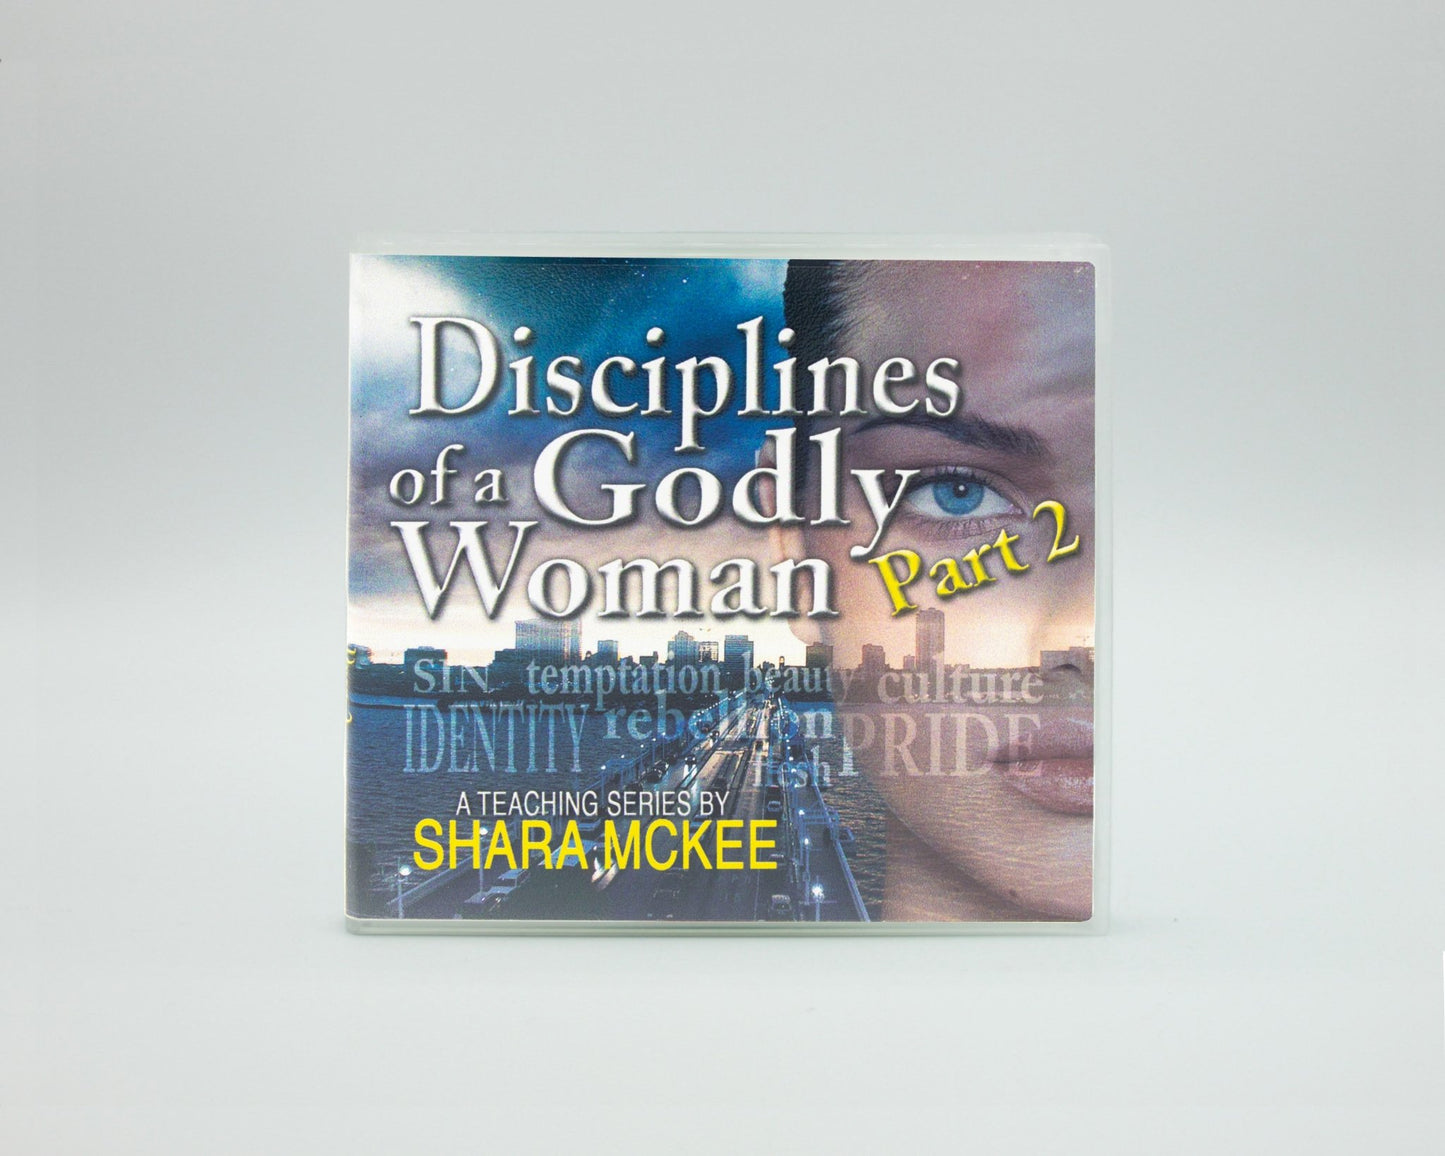 Shara Mckee - Disciplines of a Godly Woman: Part 2